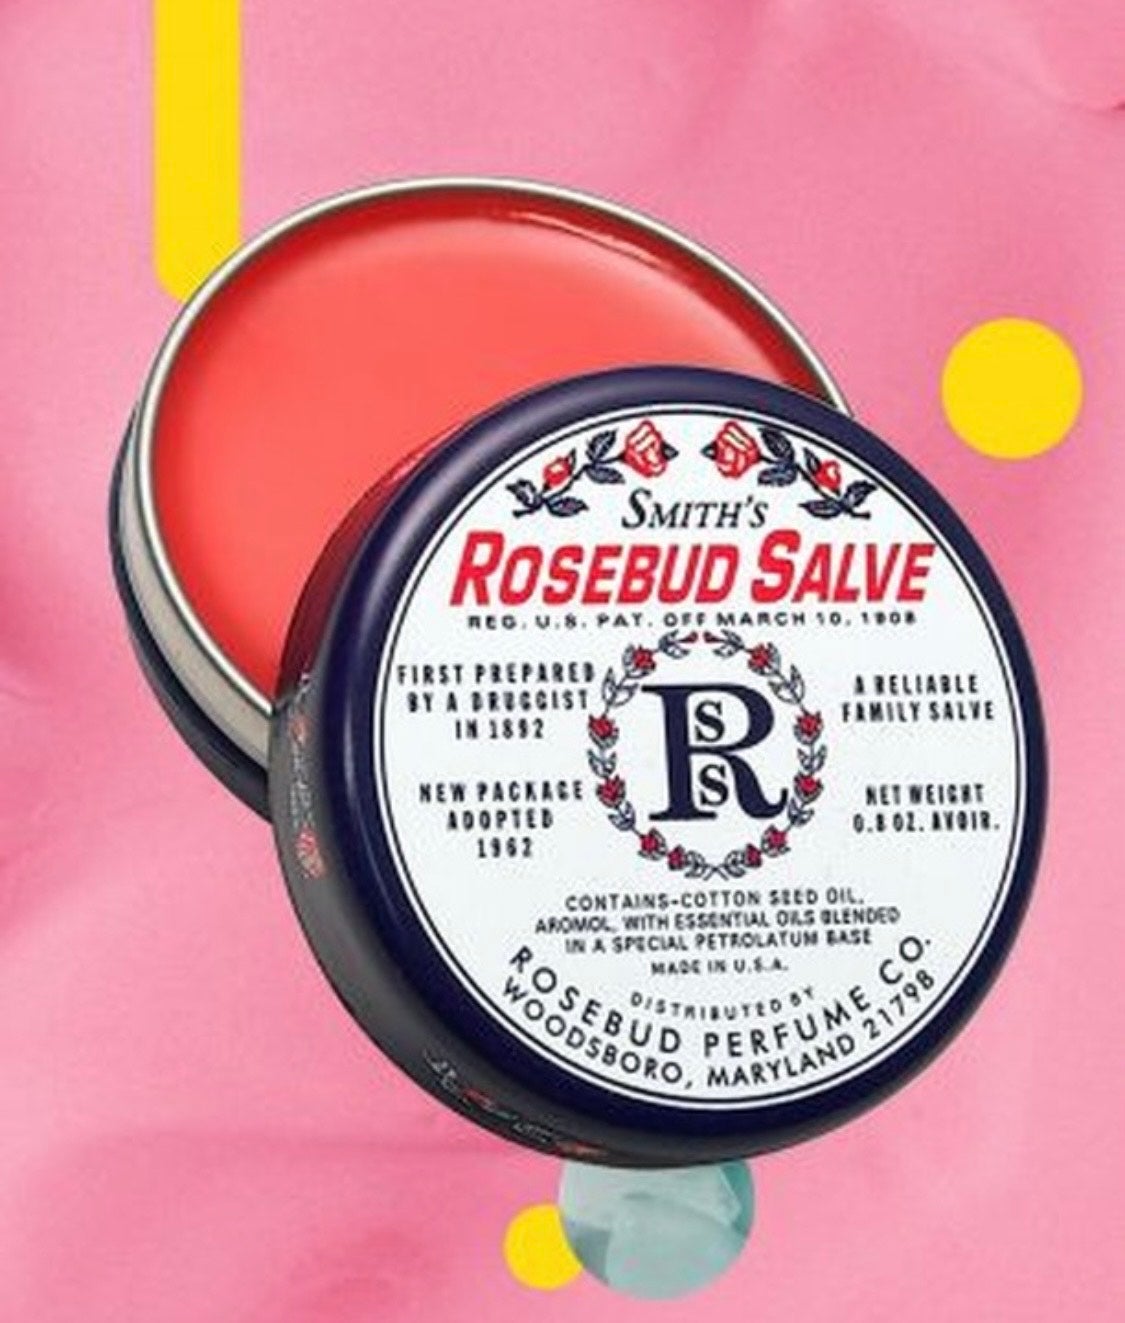 the tin of the rosebud salve